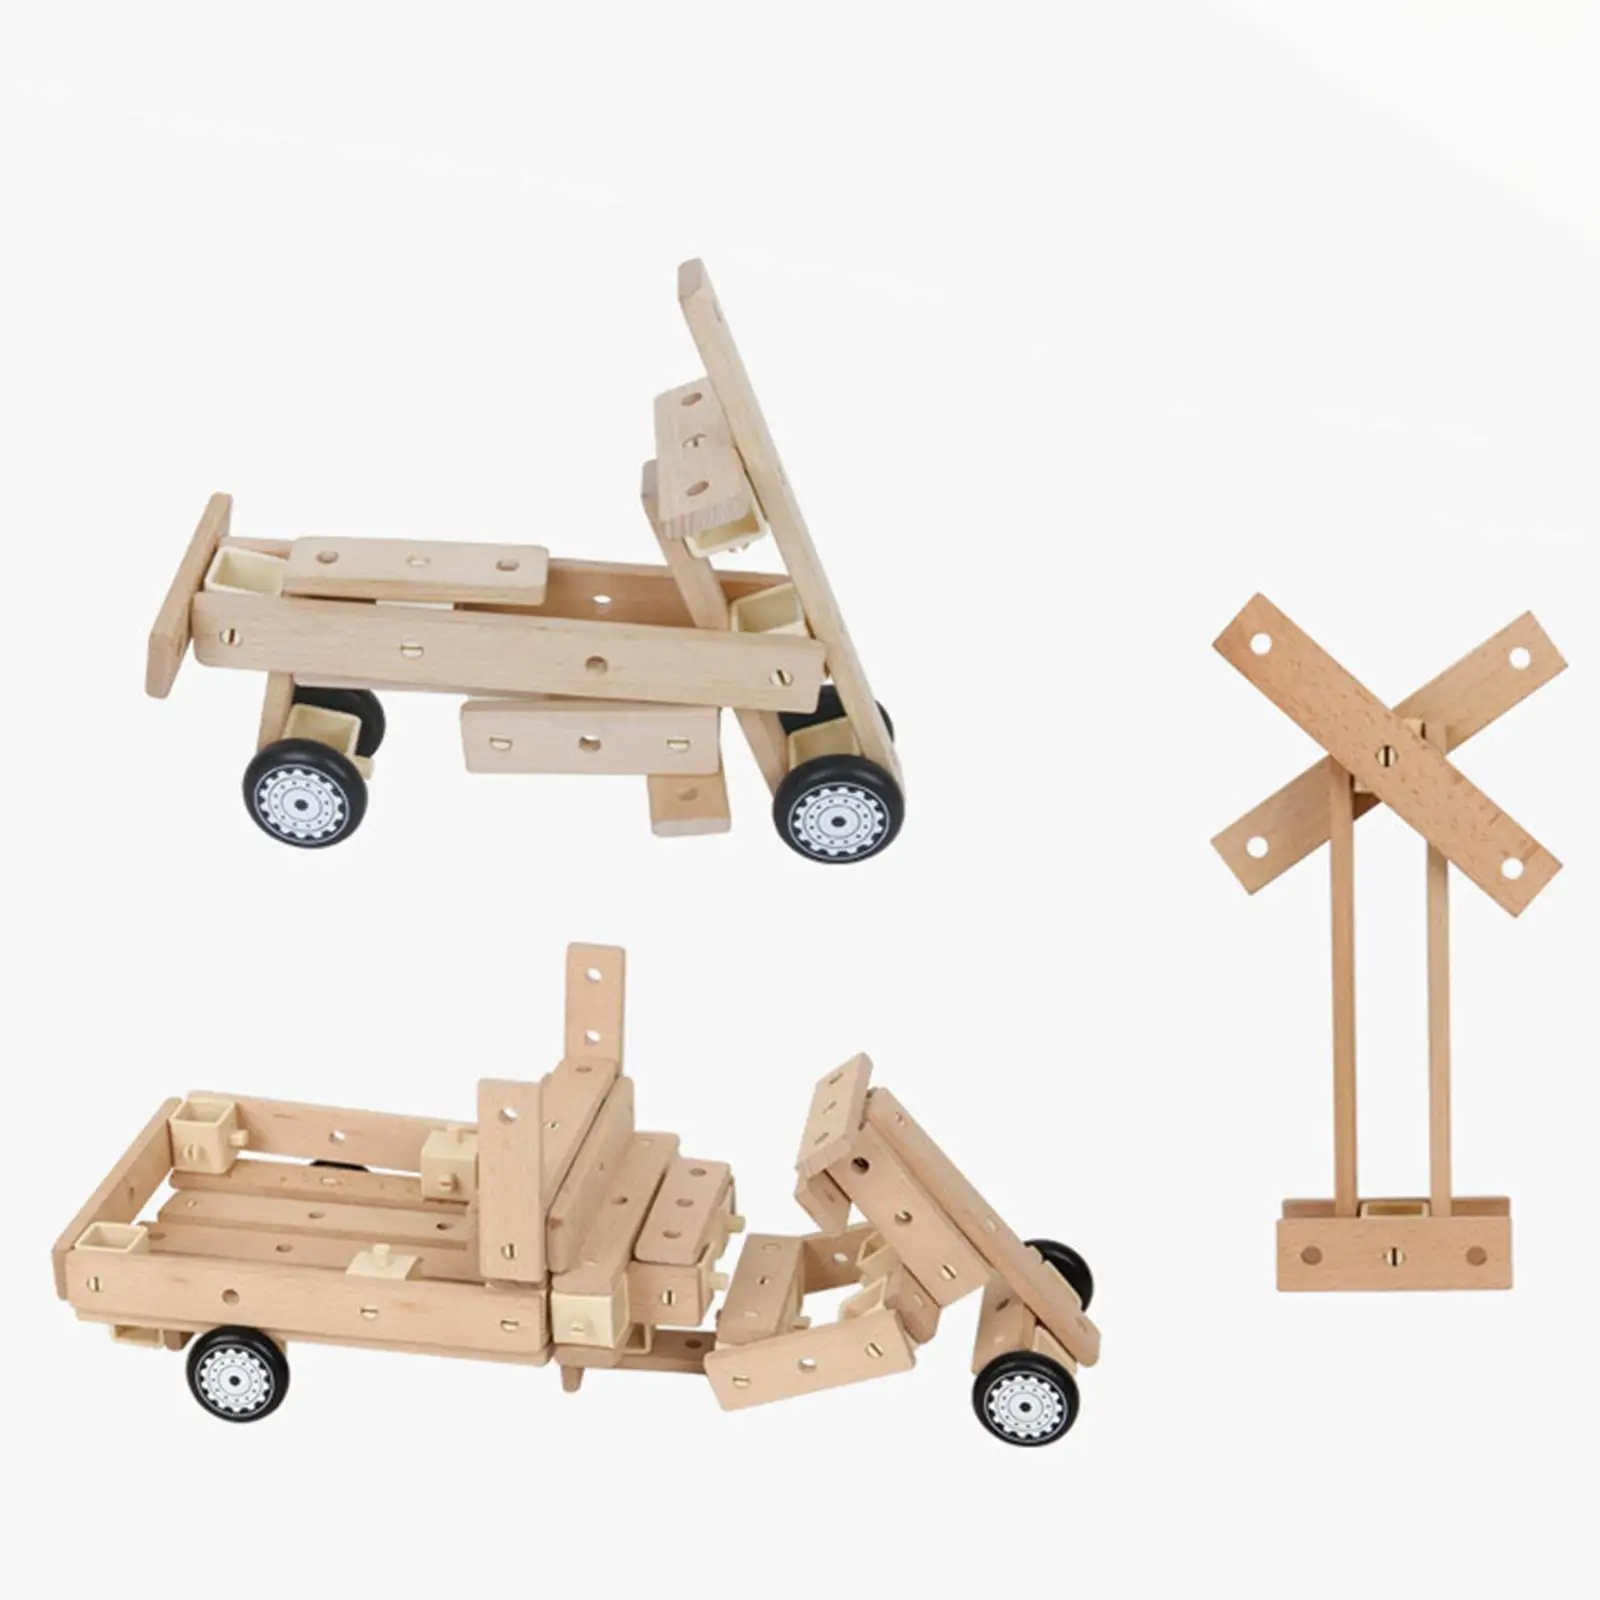 Wooden Building Blocks Set Wood Planks Set Construction Toys Early Development DIY Wood Stacking Blocks Set for Kindergarten